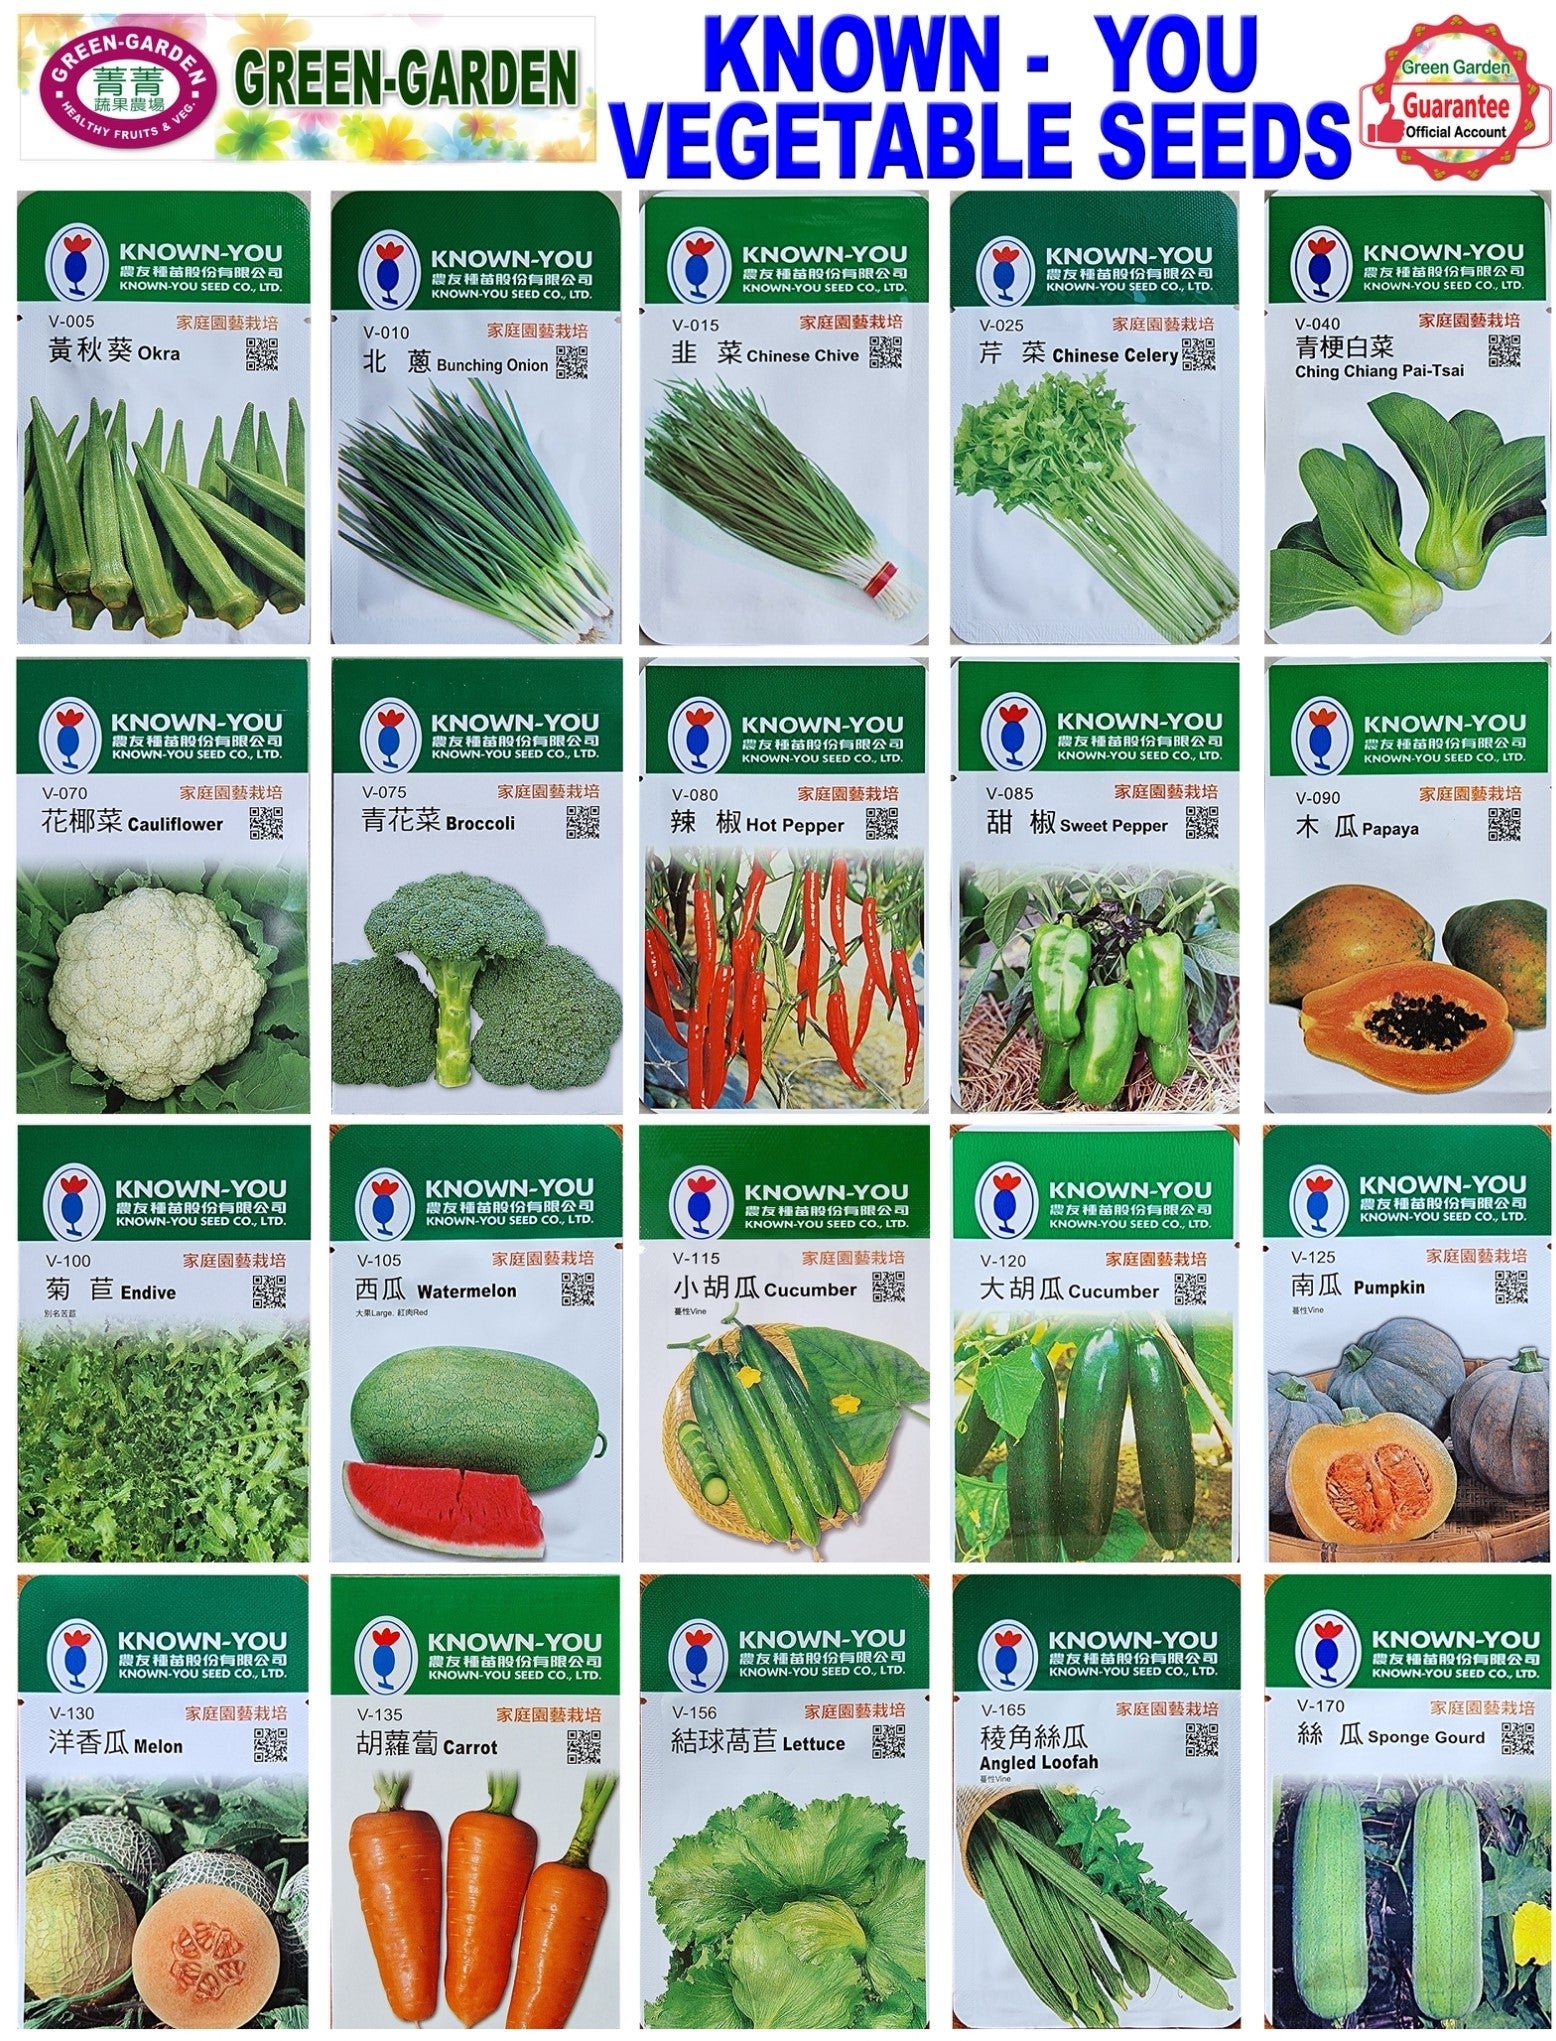 Known You Vegetable Seeds (V-195 Radish)